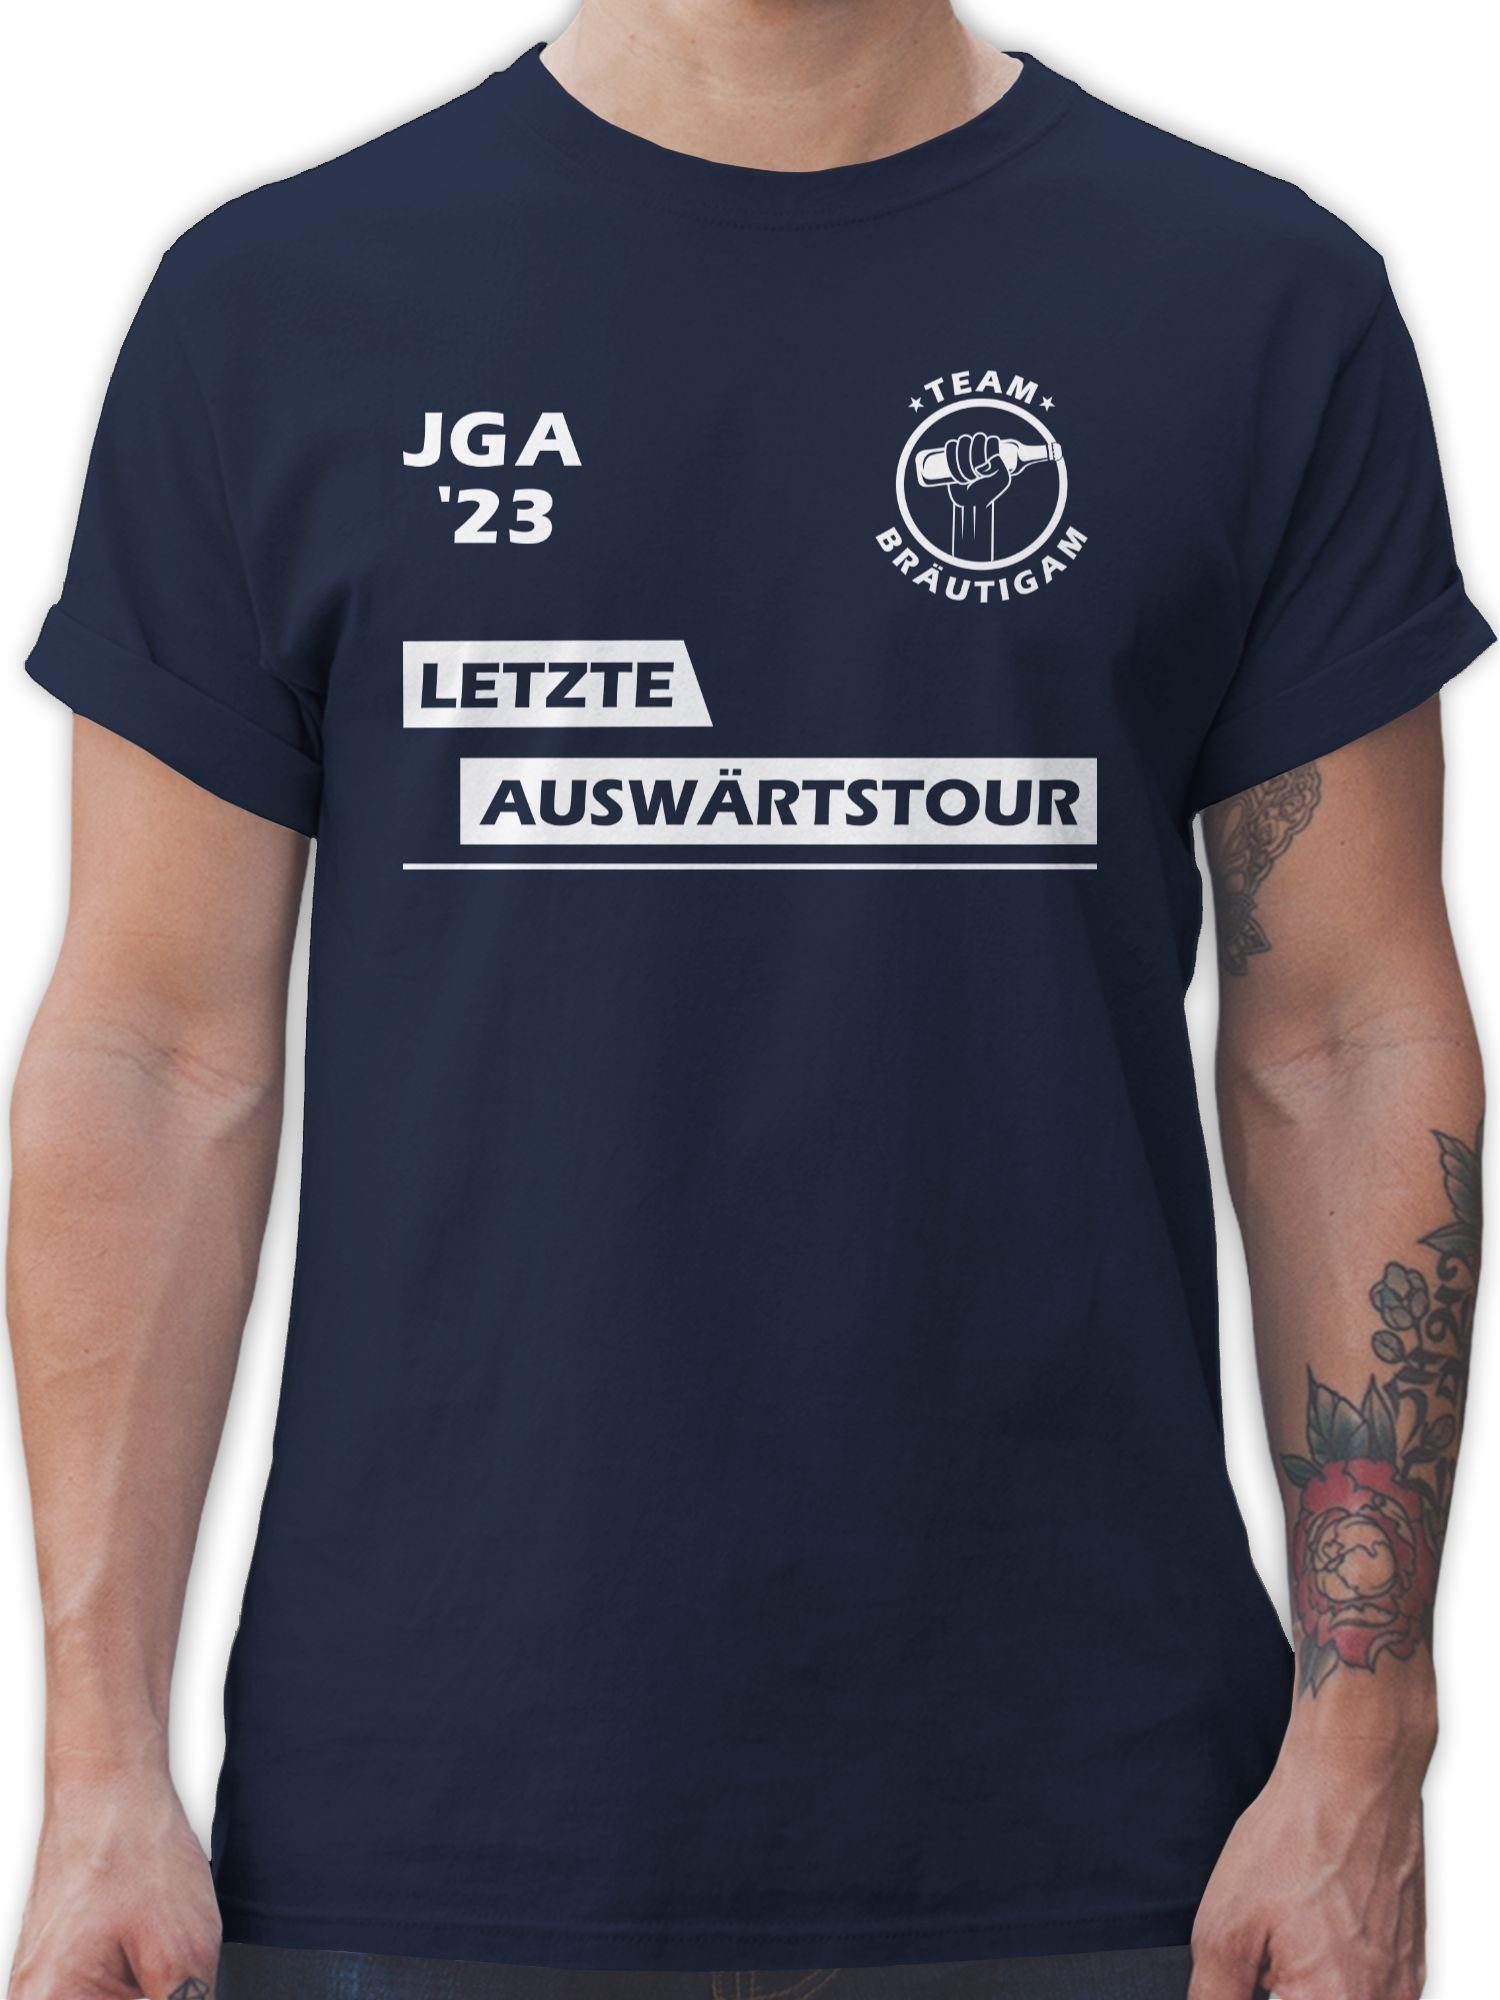 Shirtracer T-Shirt Letzte Auswärtstour Team Bräutigam JGA Männer 2 Navy Blau